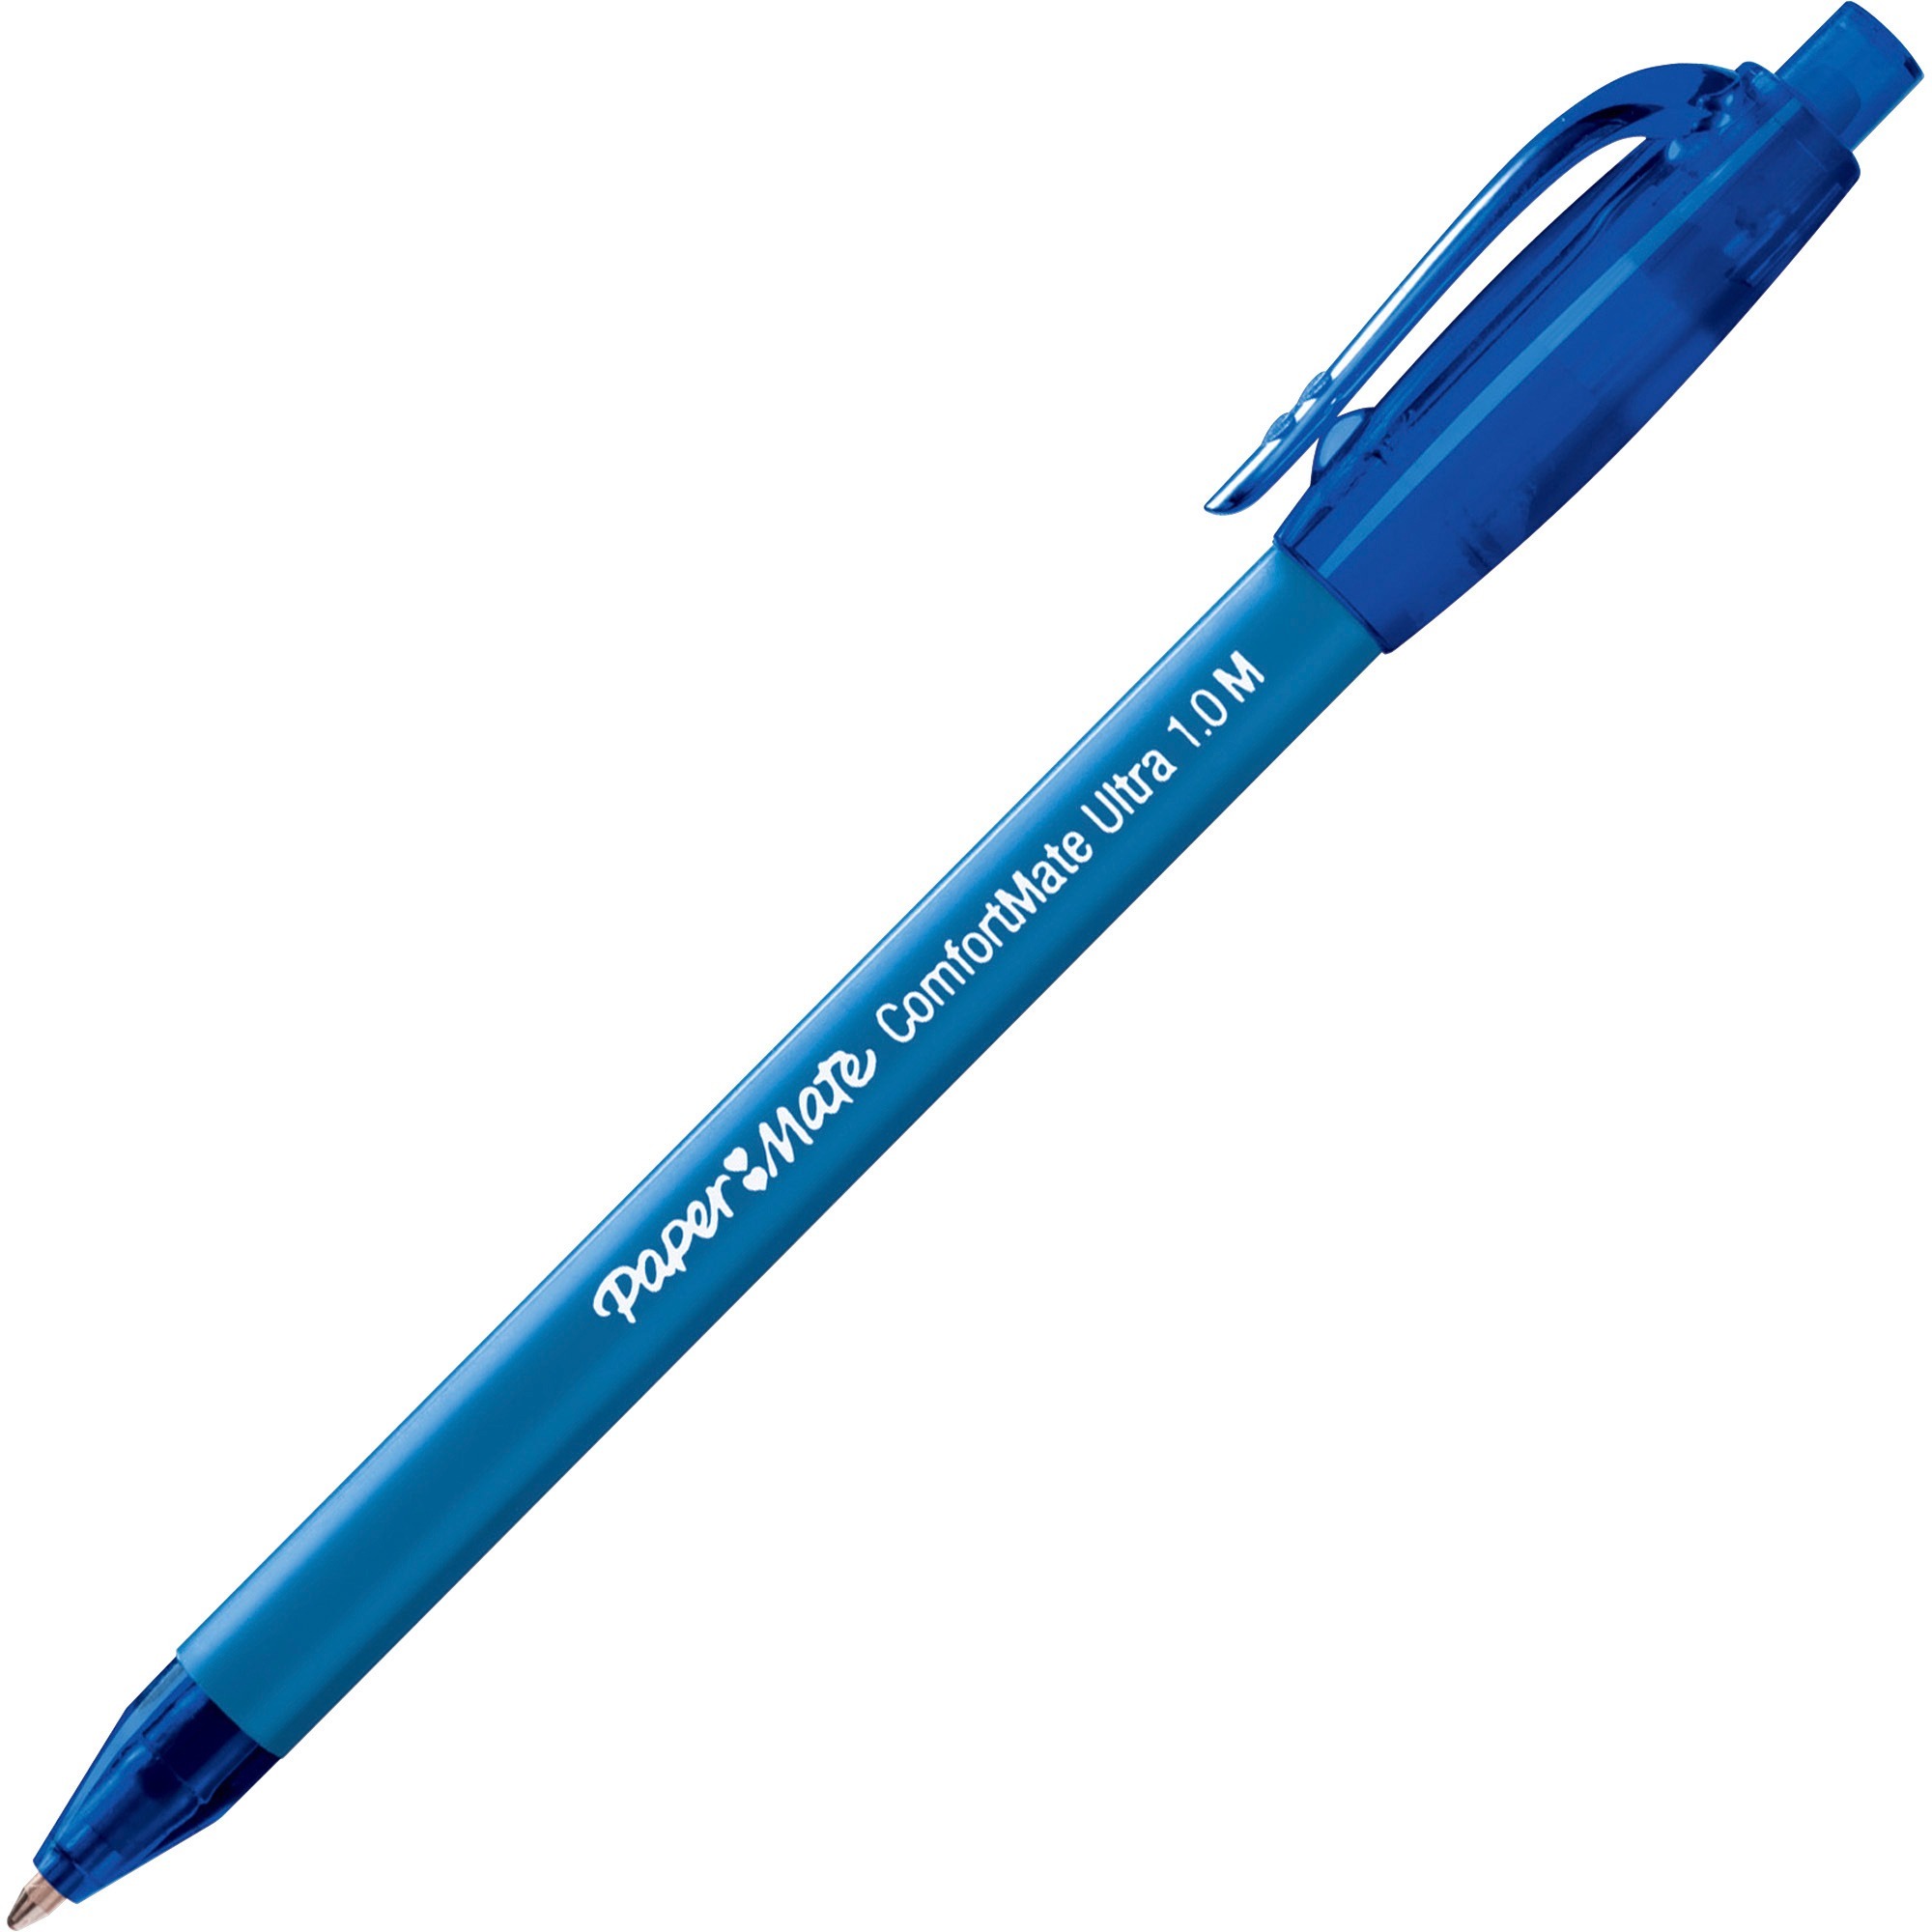 Comfort Mate Retractable Pens, Blue, medium point, 12 ct - image 2 of 3